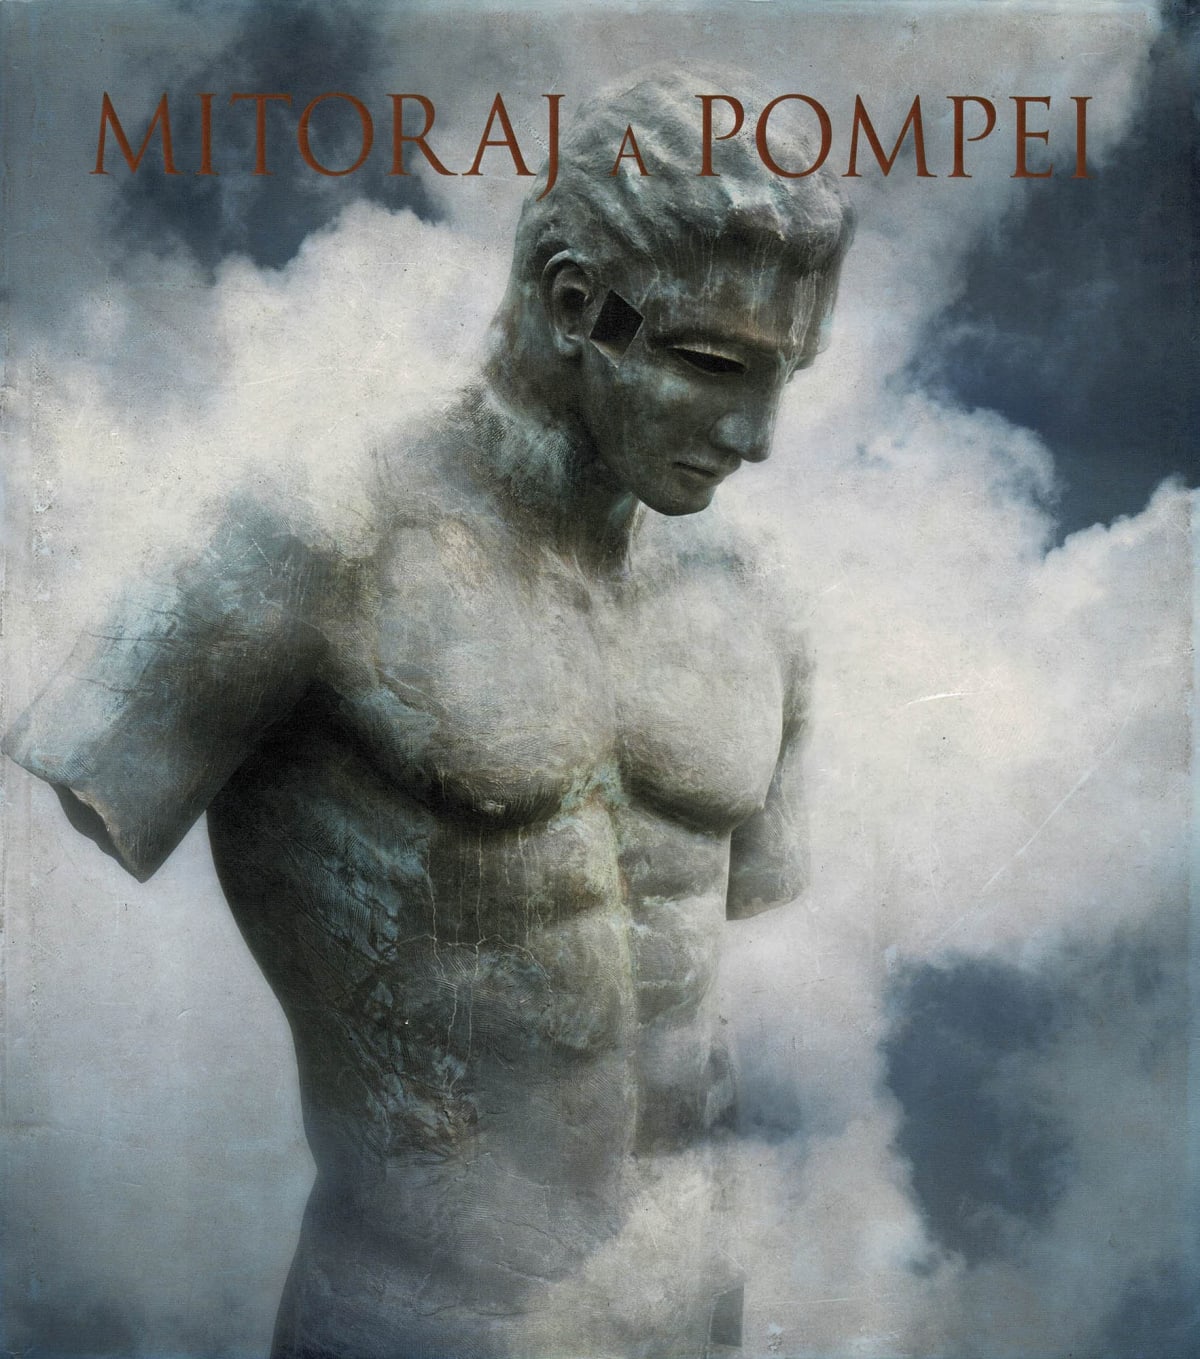 Mitoraj a Pompei